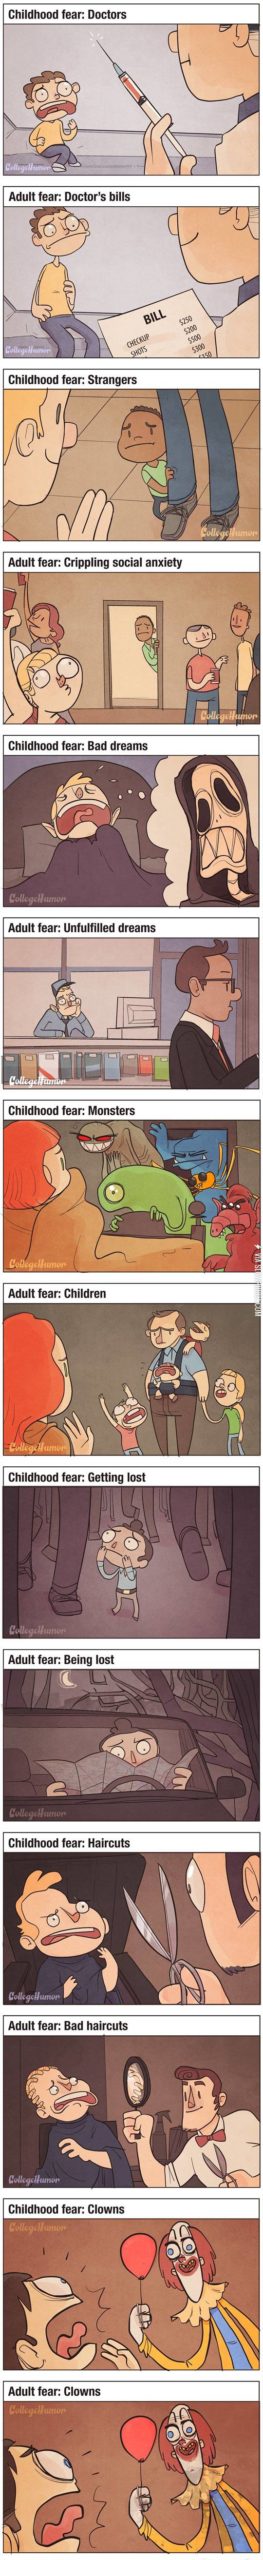 Childhood+vs.+adult+fears.